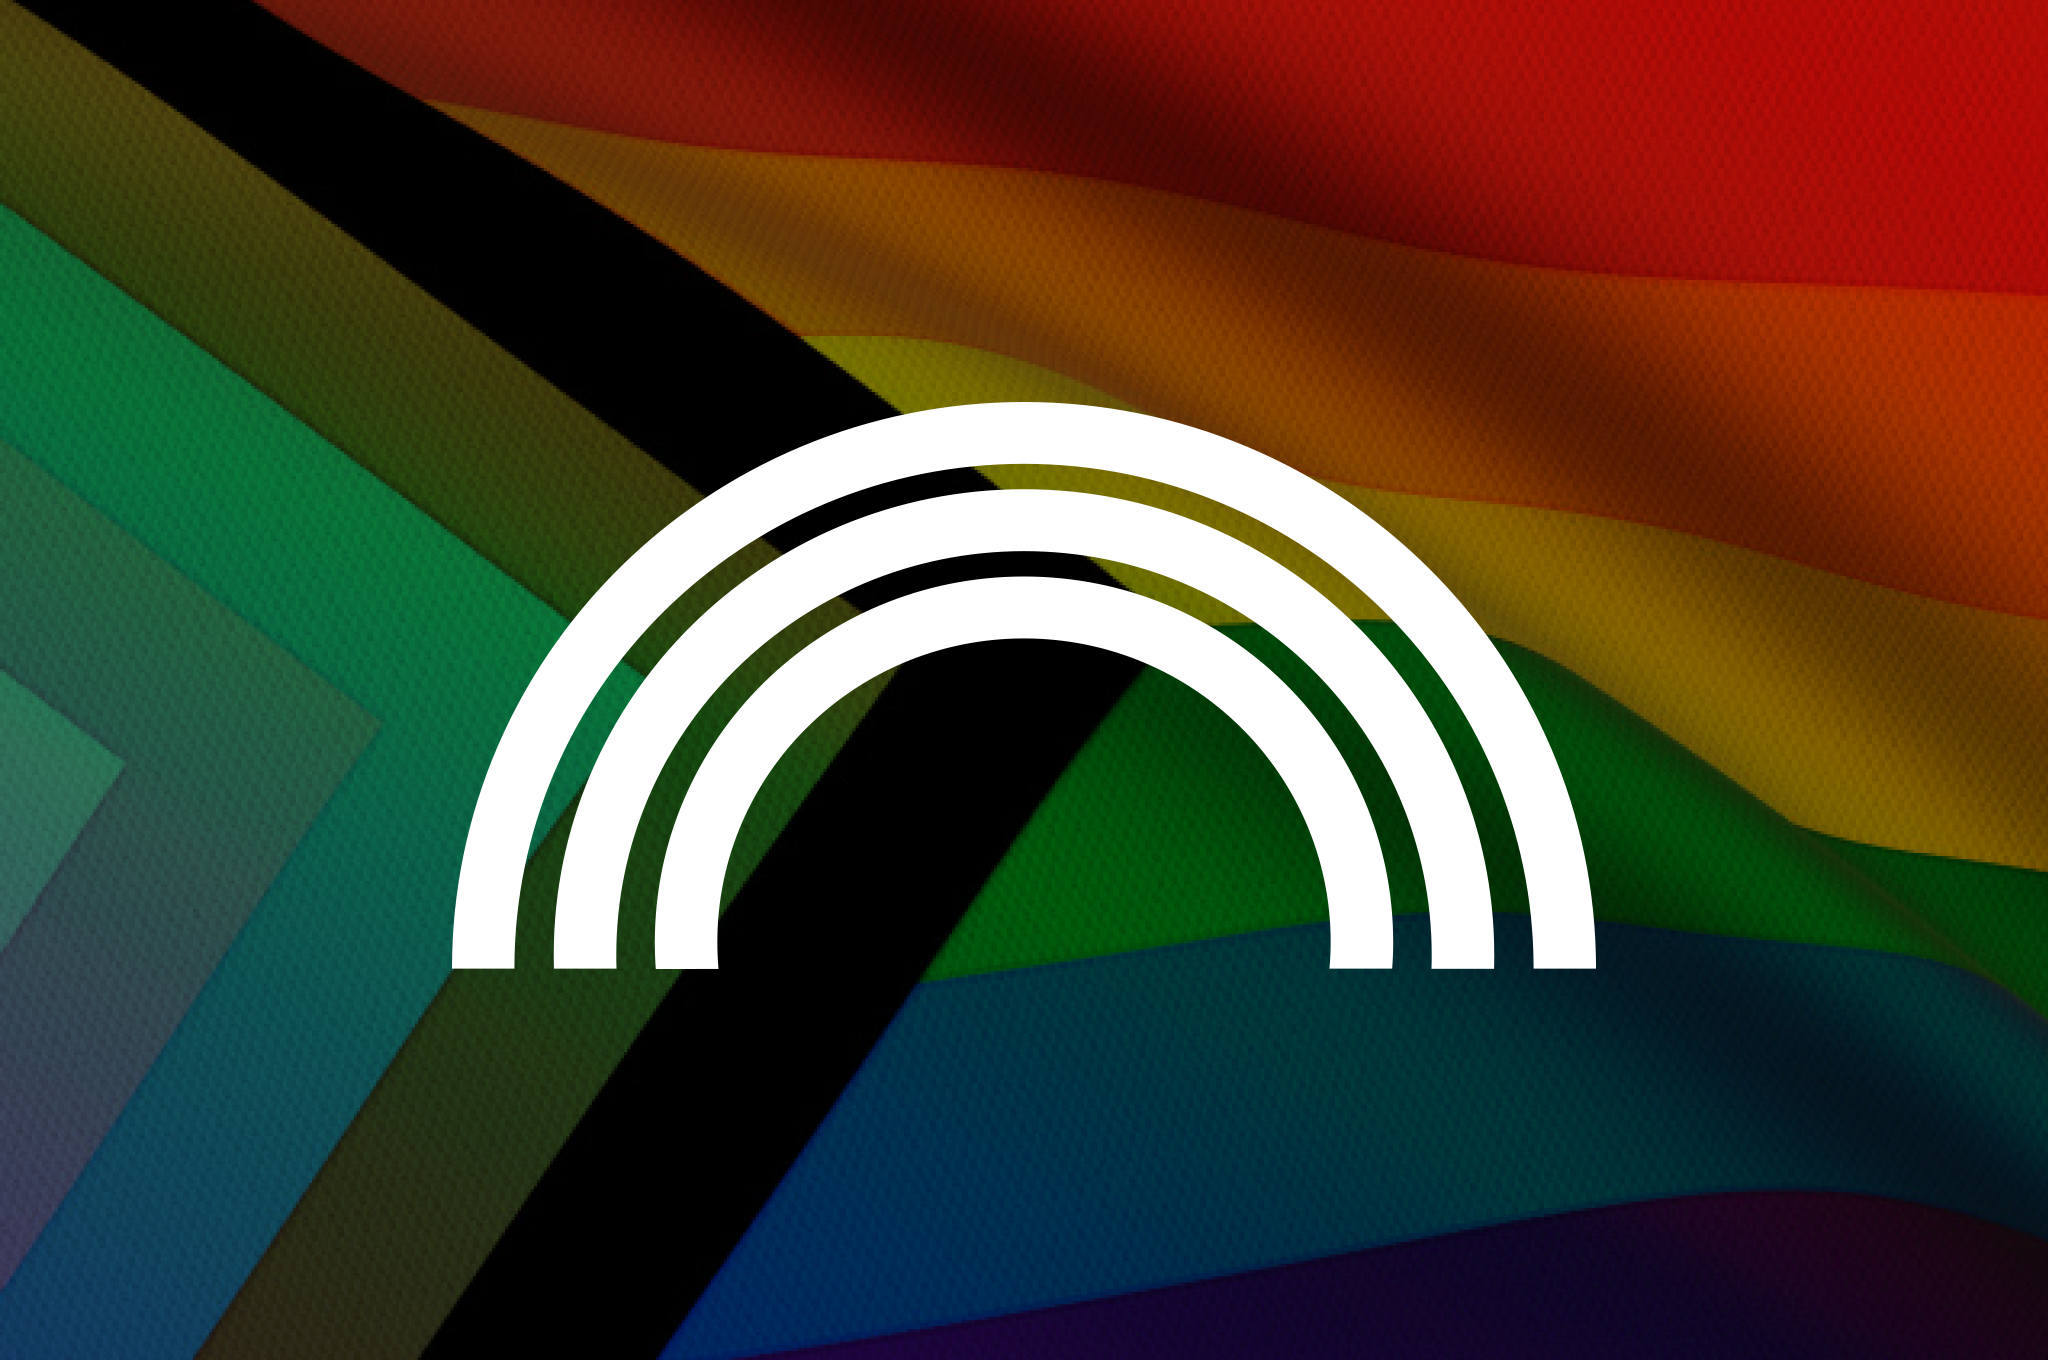 Pride Alliance logo